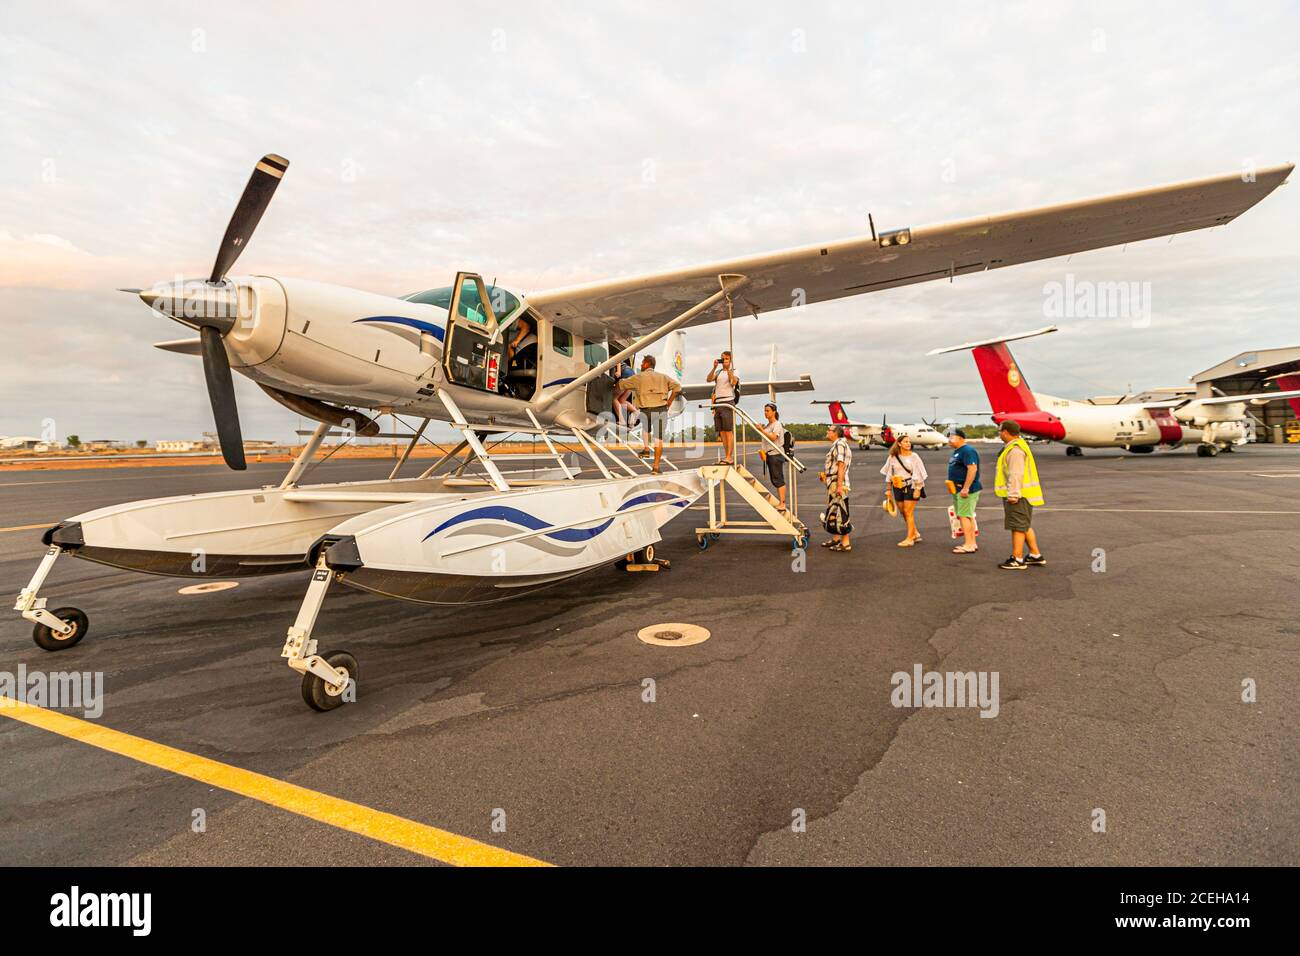 Outback Float Plane Adventures am oberen Ende Australiens Stockfoto